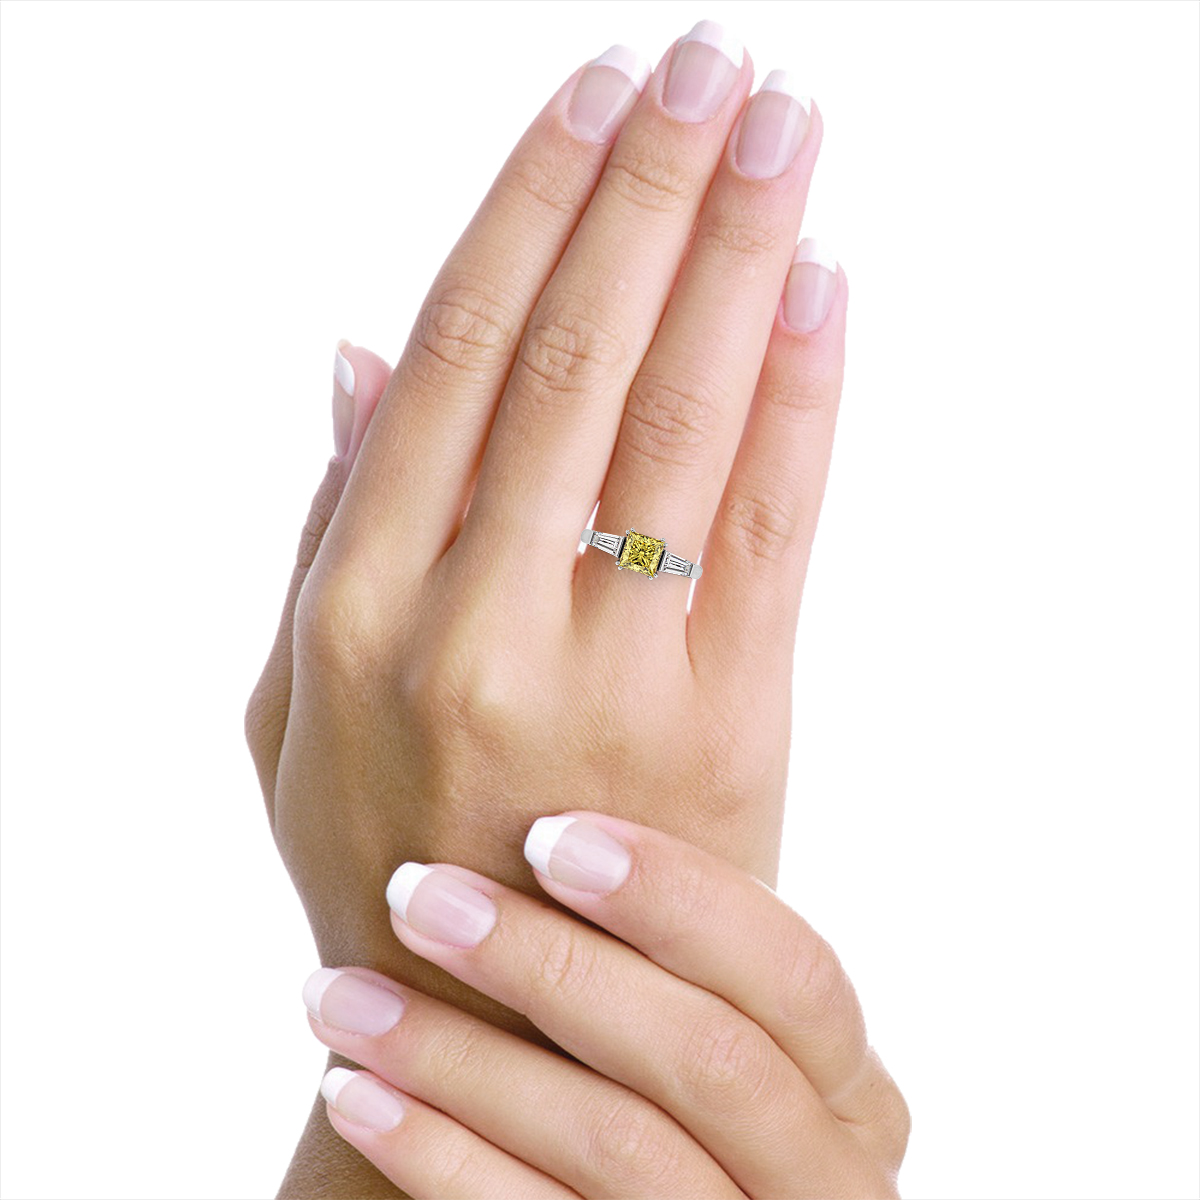 Gold / Platinum Yellow Sapphire and Diamond Engagement Ring RZ3440